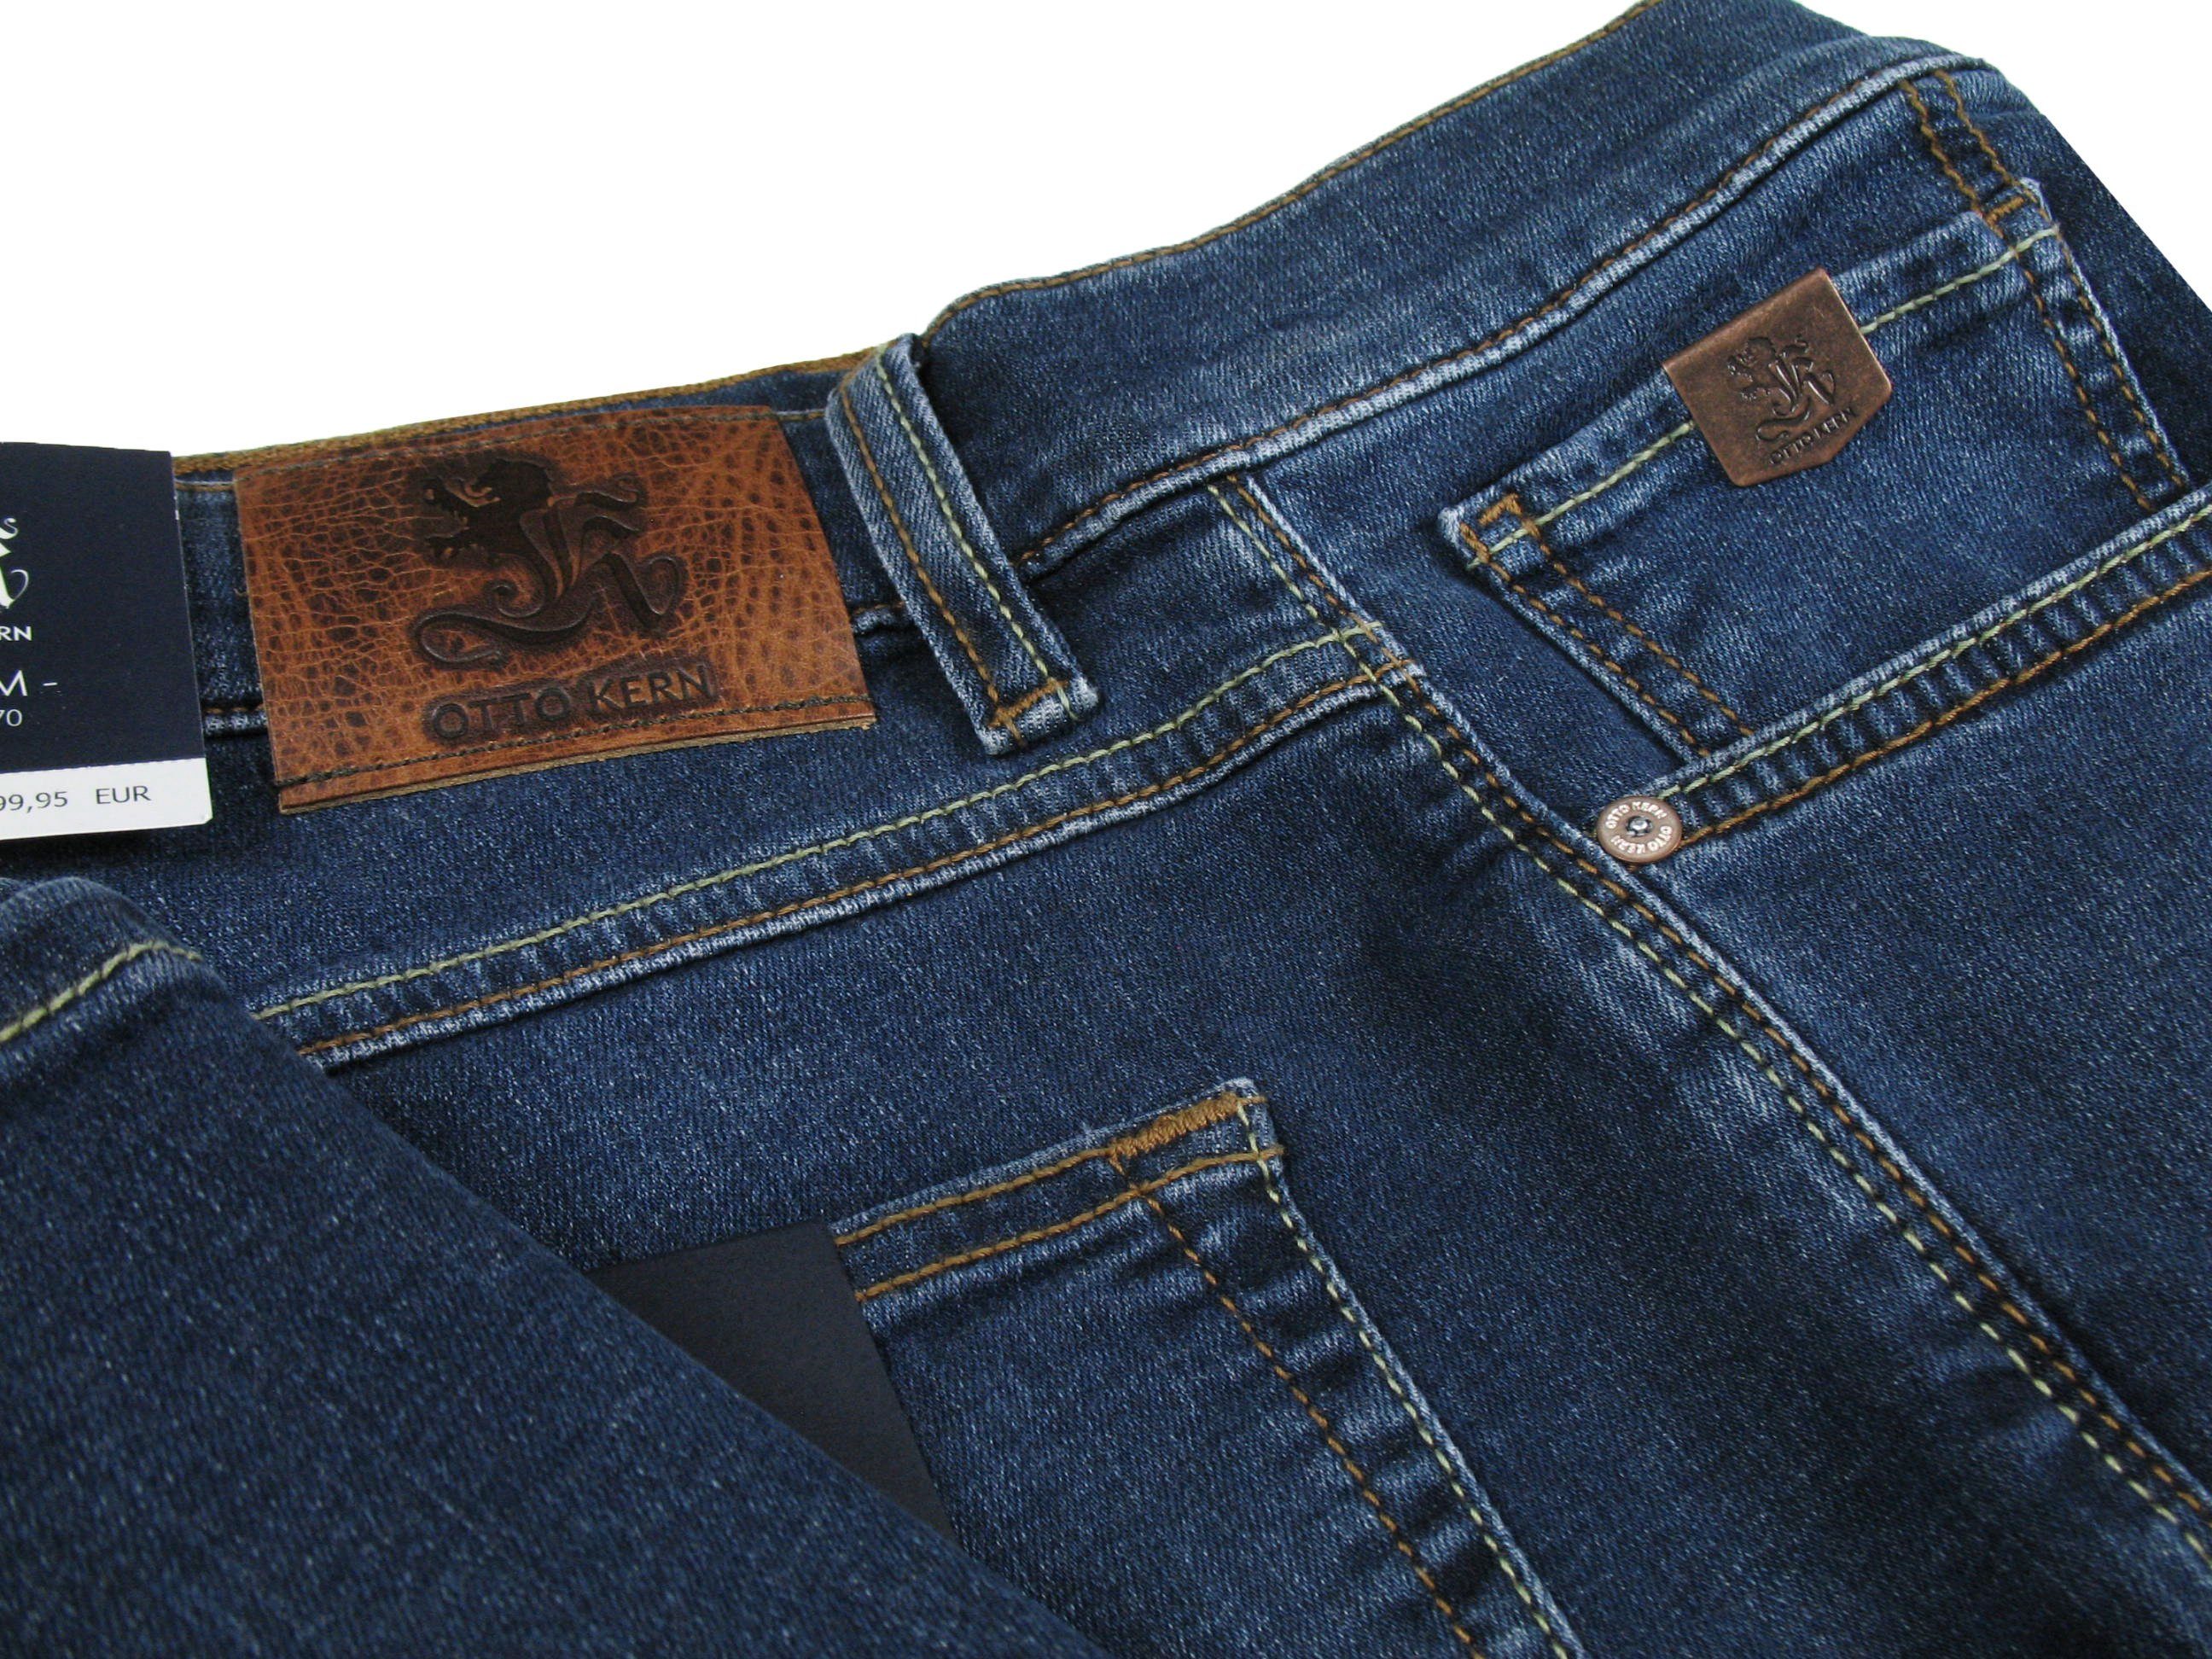 Otto Kern Kern Blue John Dark Stone Pure 5-Pocket-Jeans Denim Flex